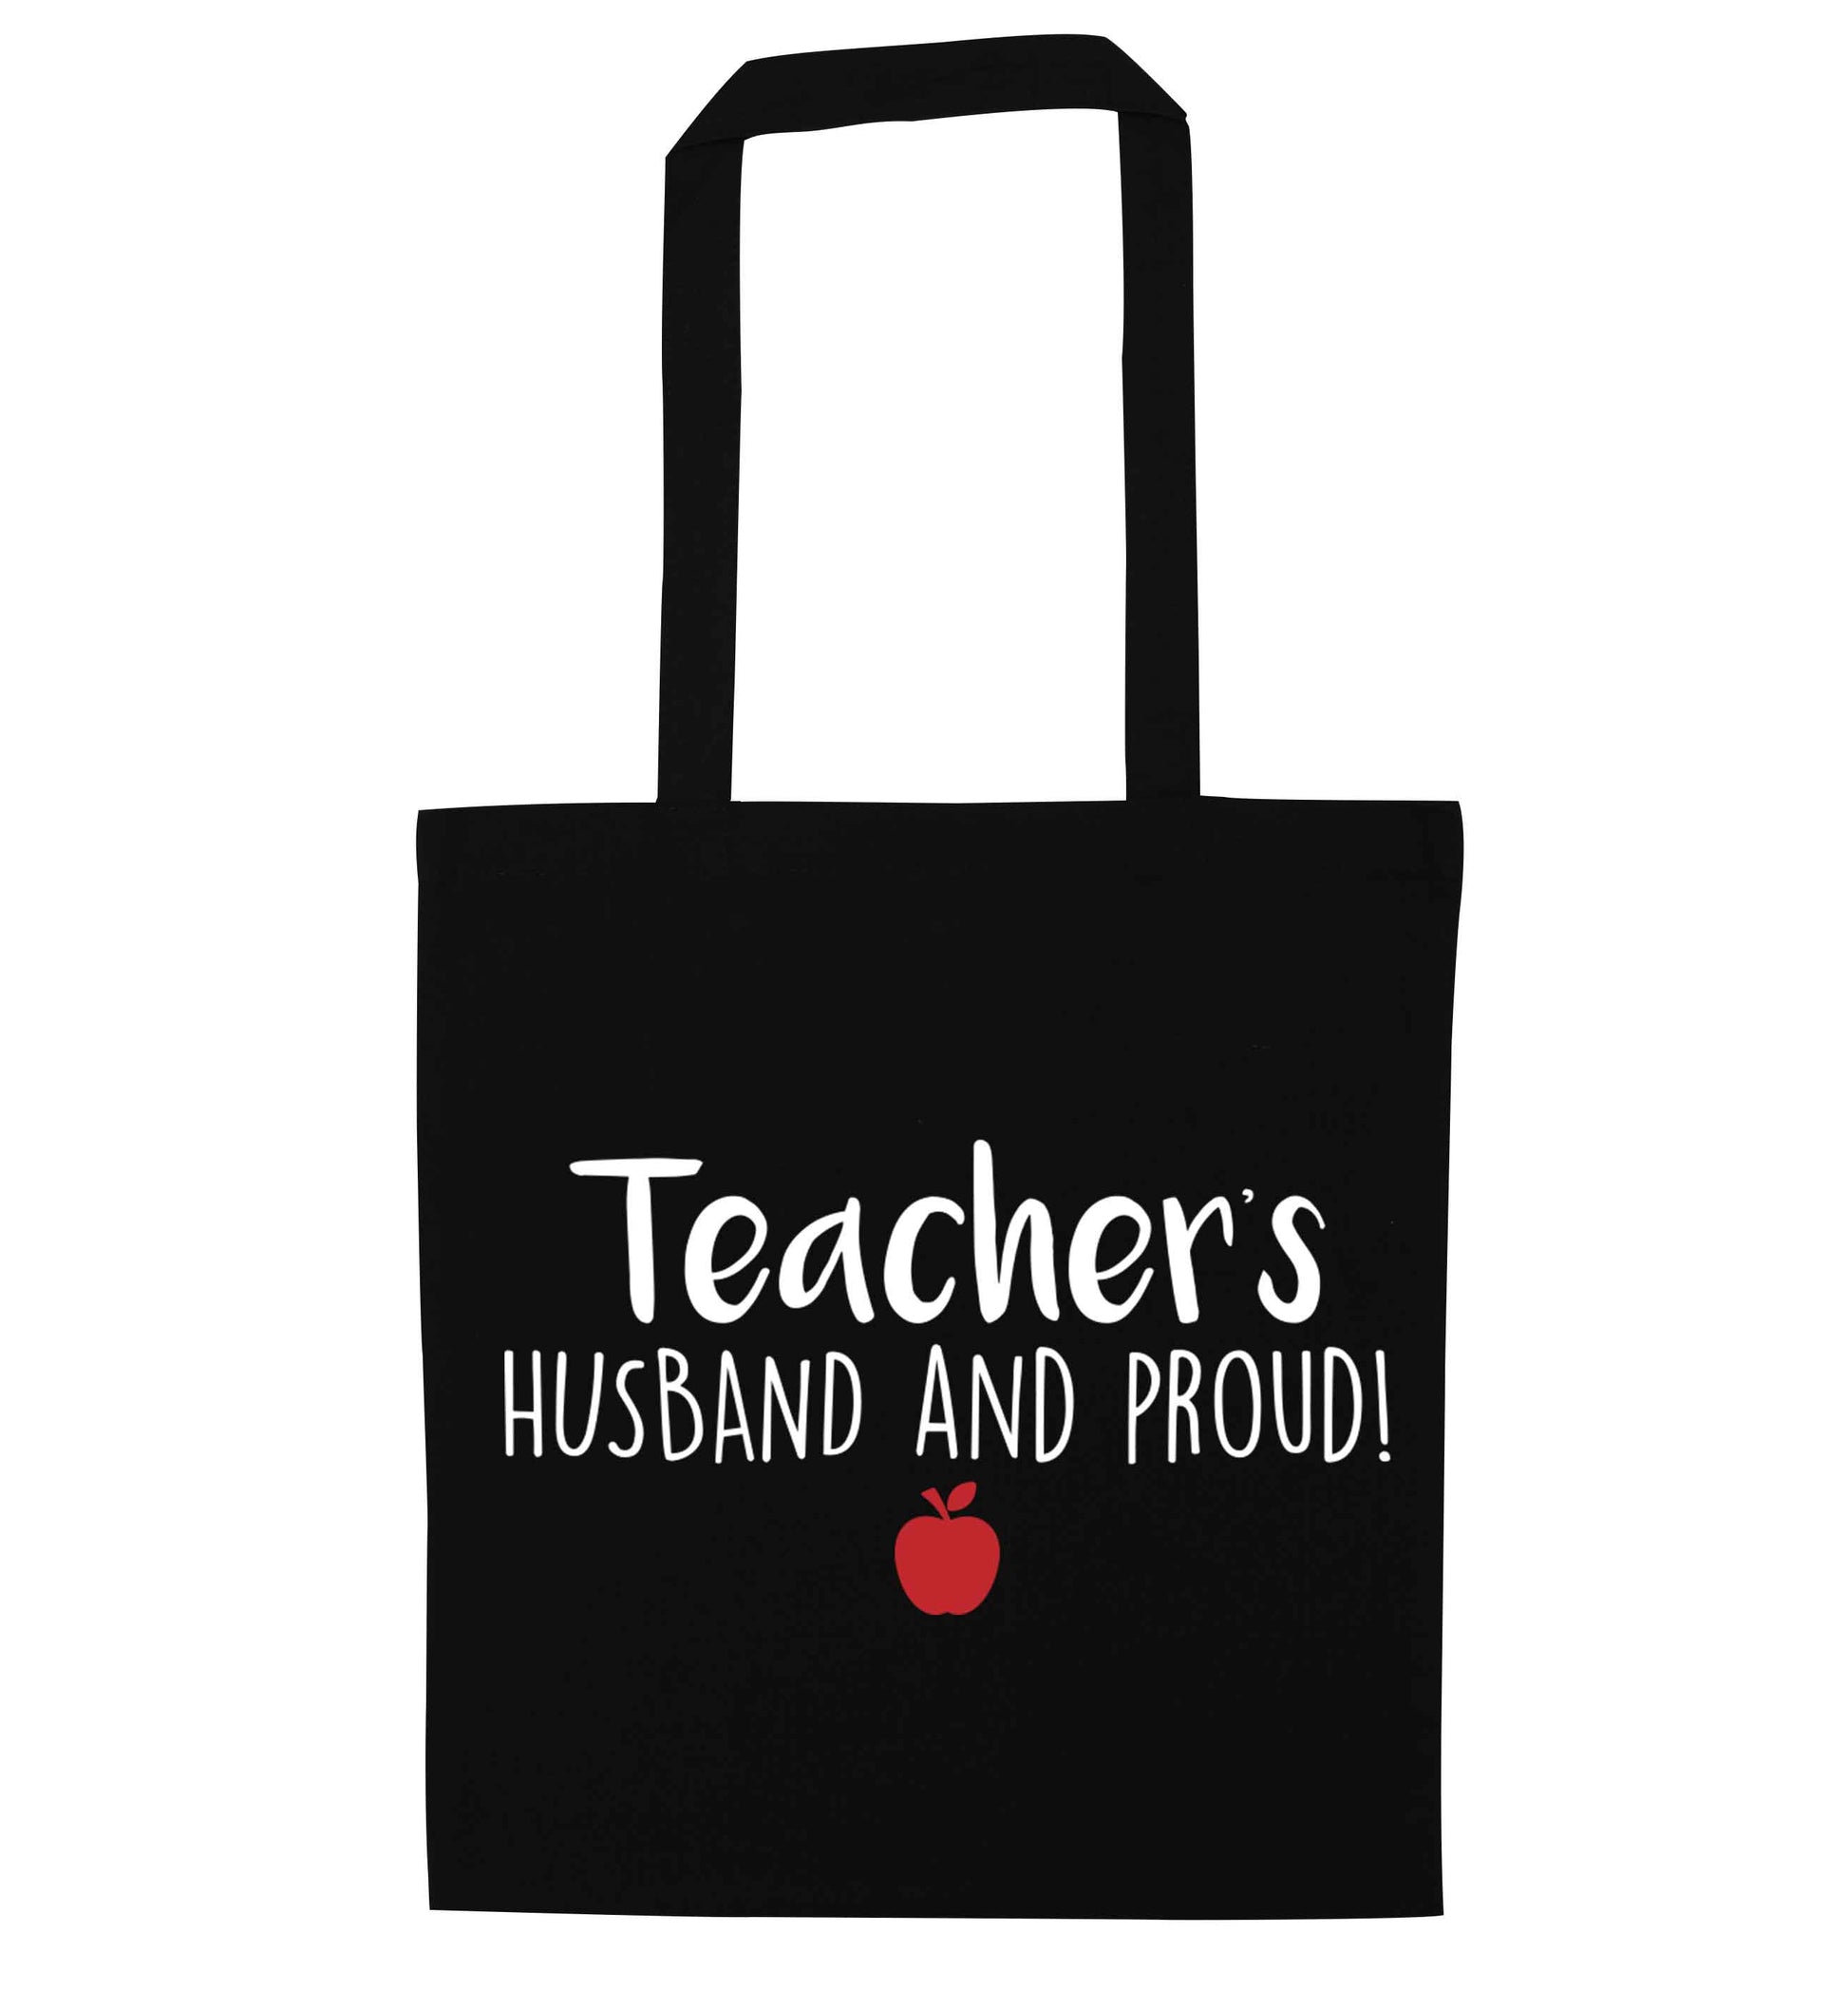 Teachers husband and proud black tote bag